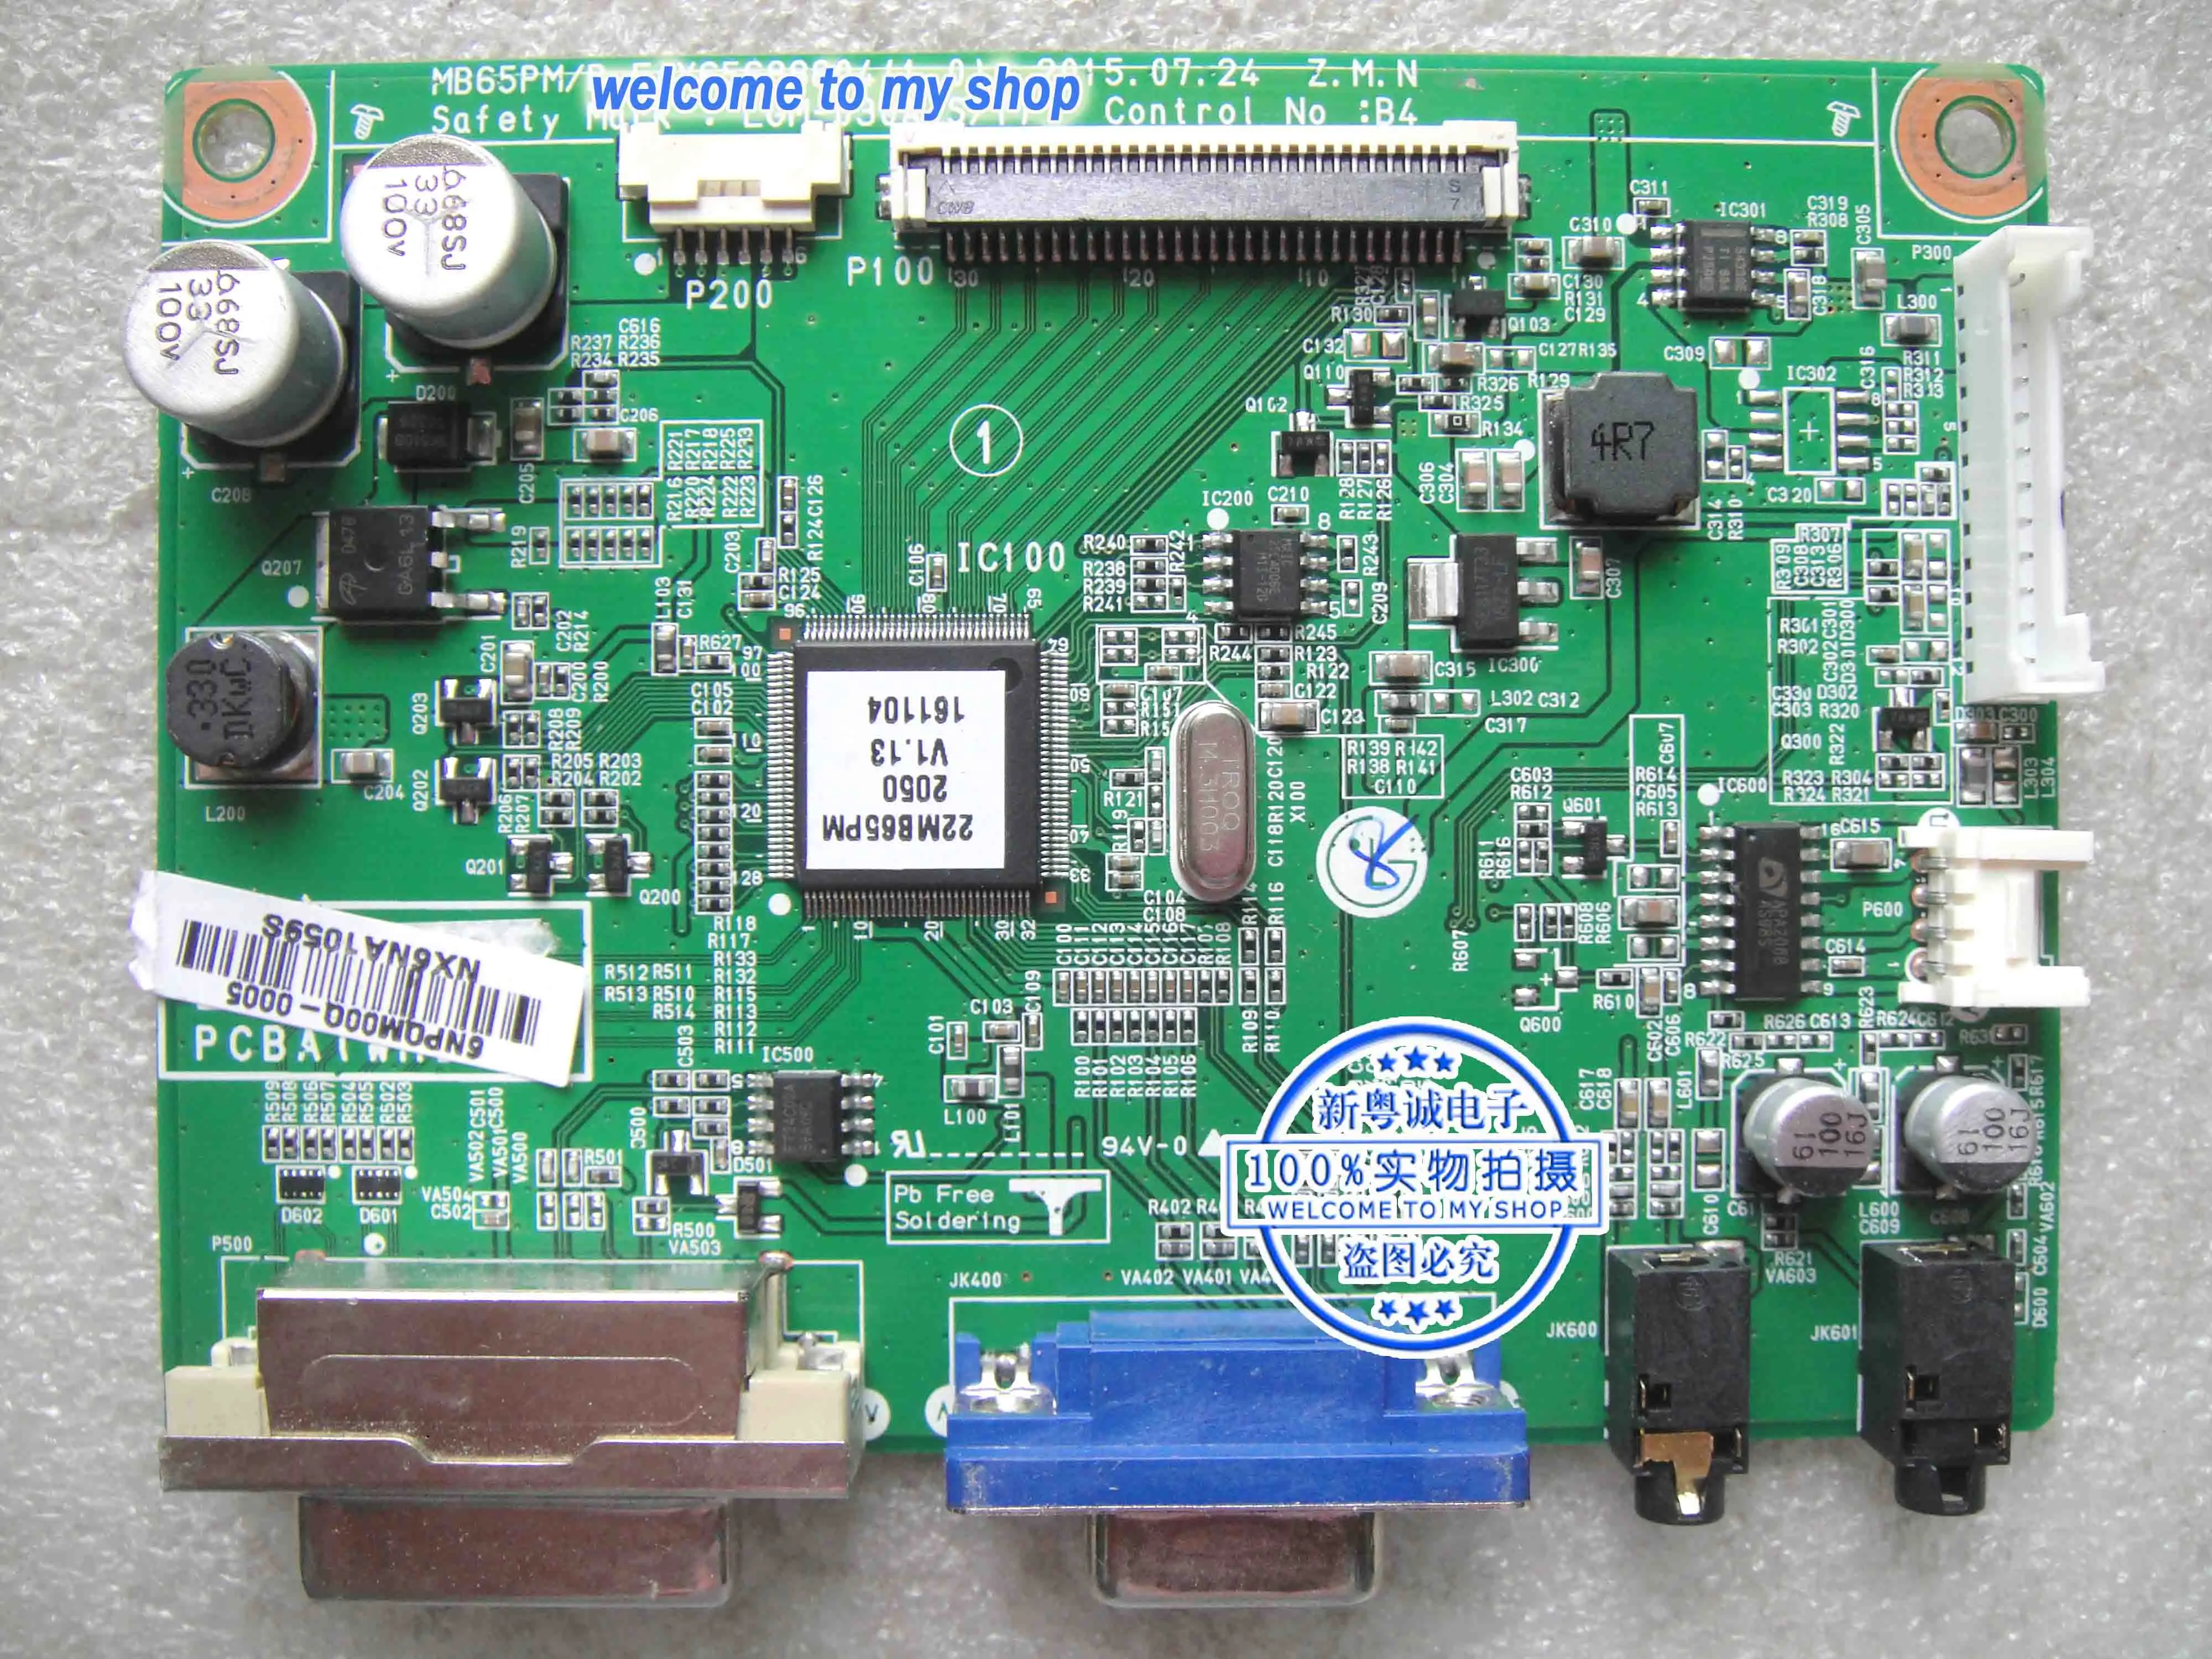 

22MB65PM Driver Board EAX65688804 (1.0) Motherboard LGM-030A (S / T)